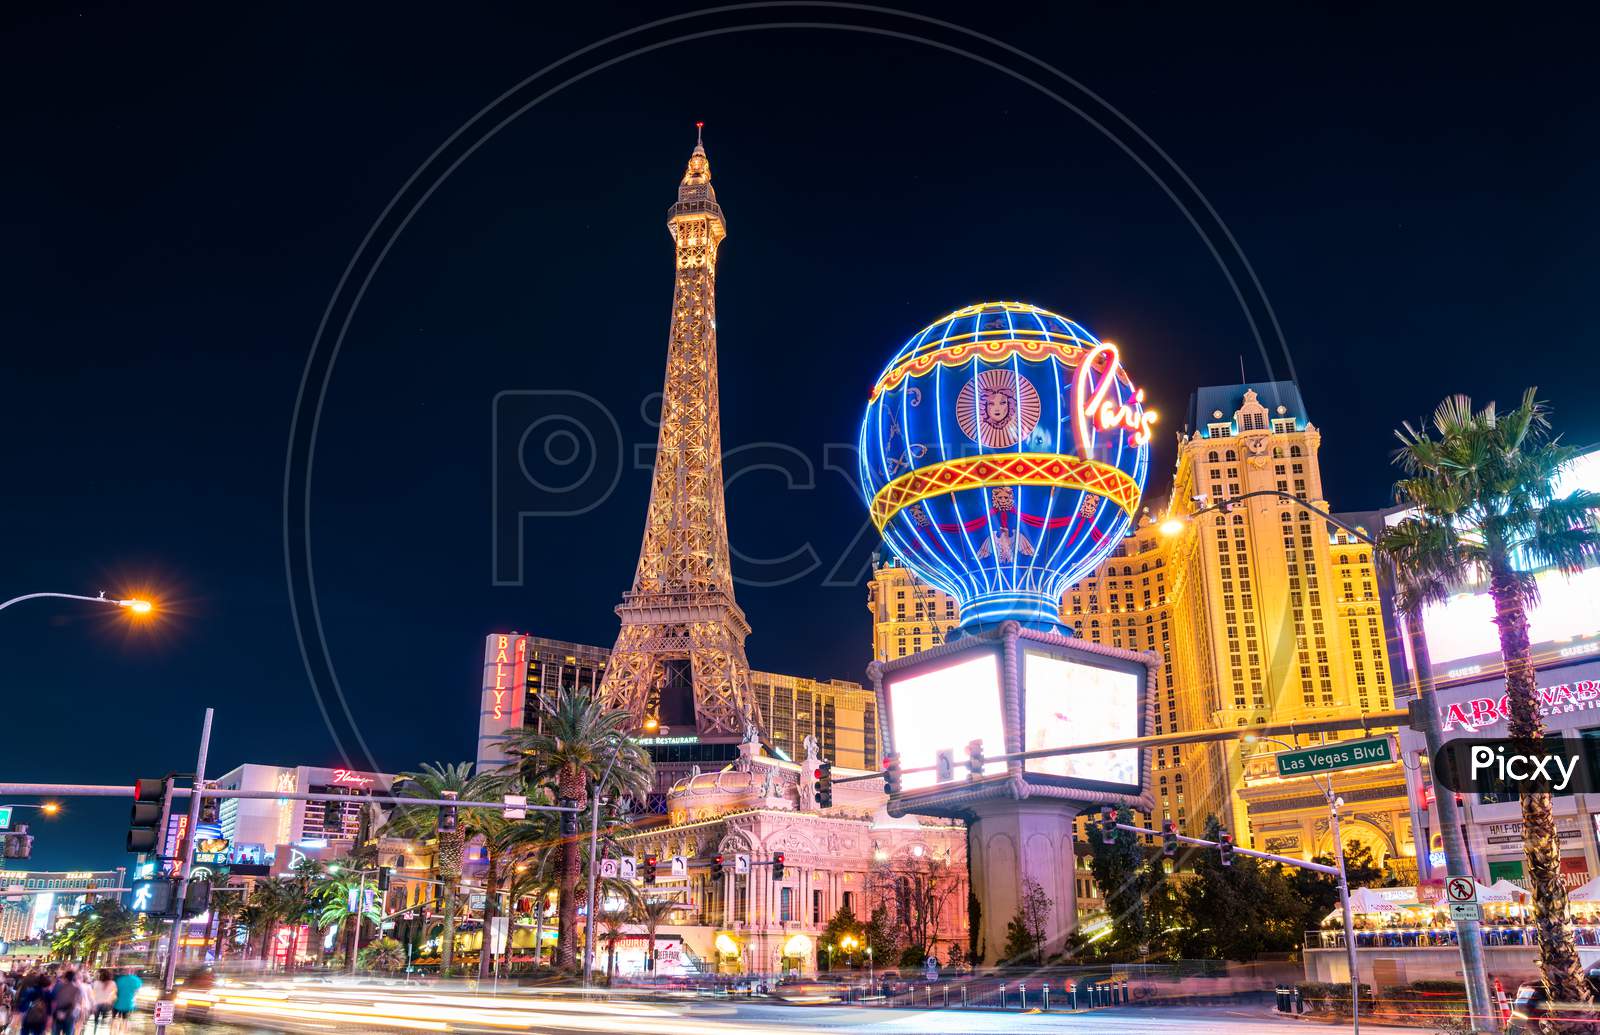 Paris Las Vegas, A Hotel And Casino In Nevada, United States